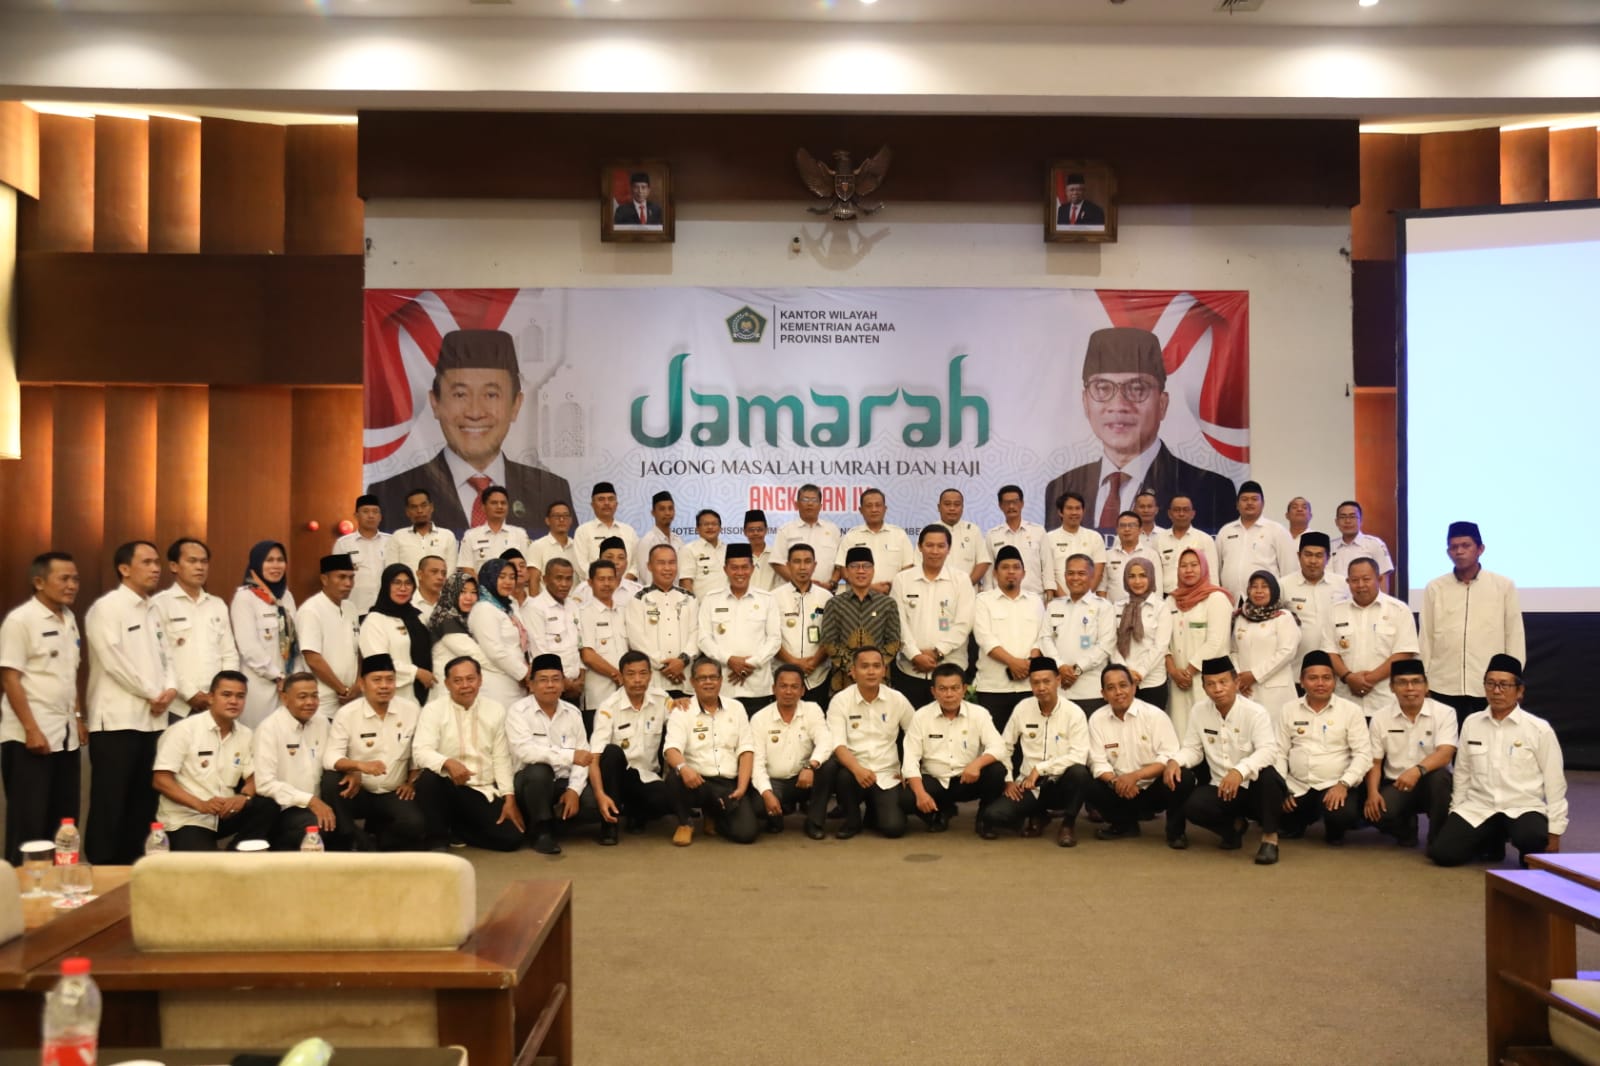 Walikota Serang menghadiri sekaligus menjadi Narasumber pada kegiatan Jamarah